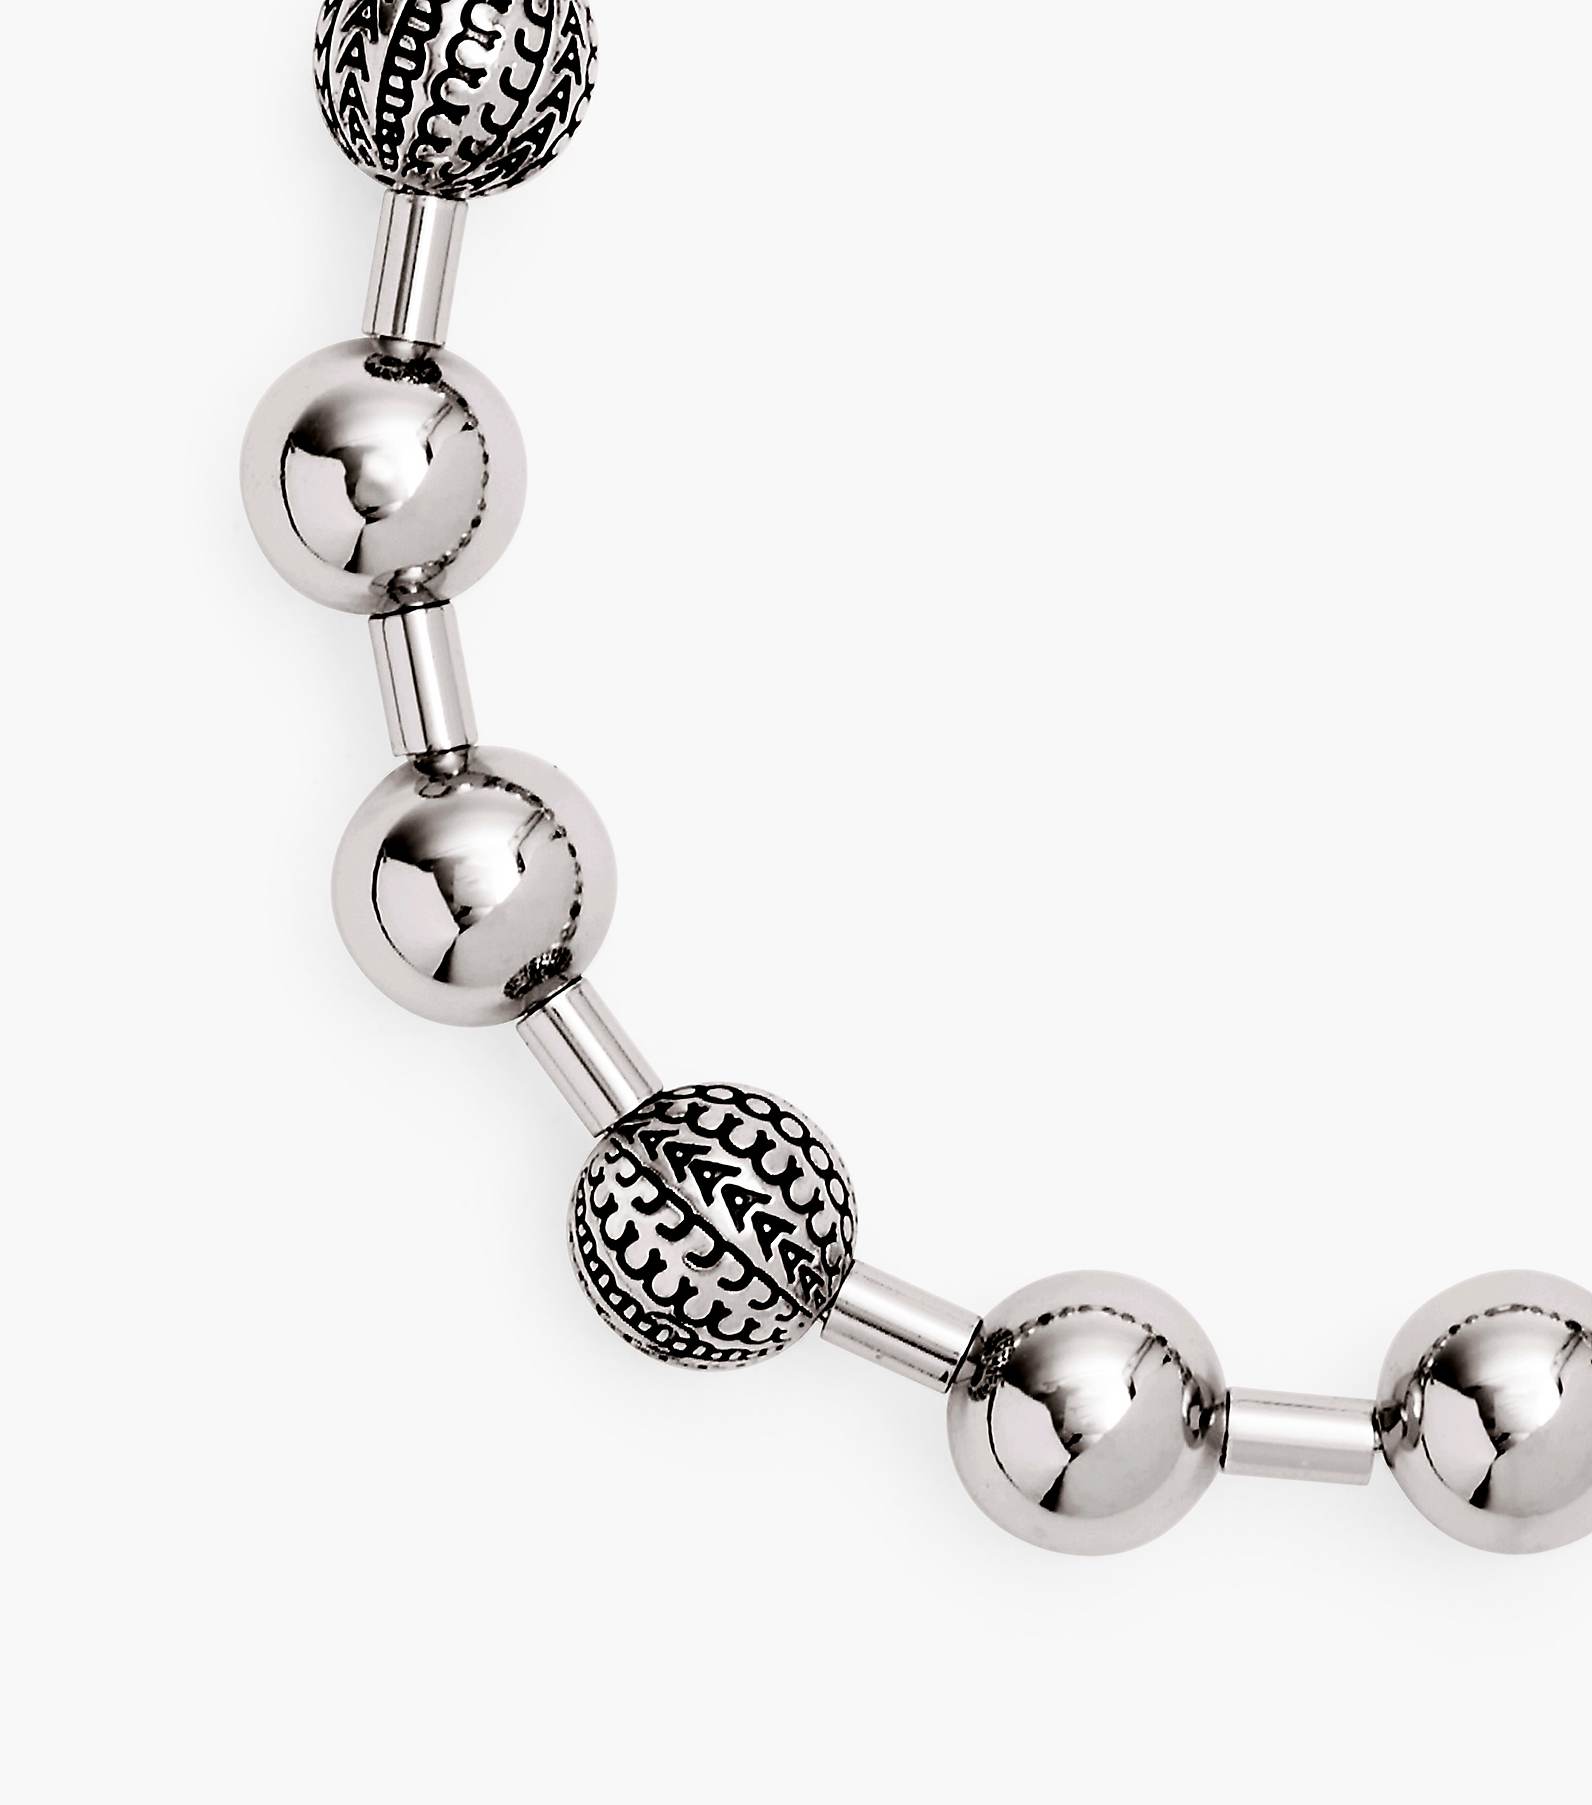 The Monogram Ball Chain Bracelet, Marc Jacobs